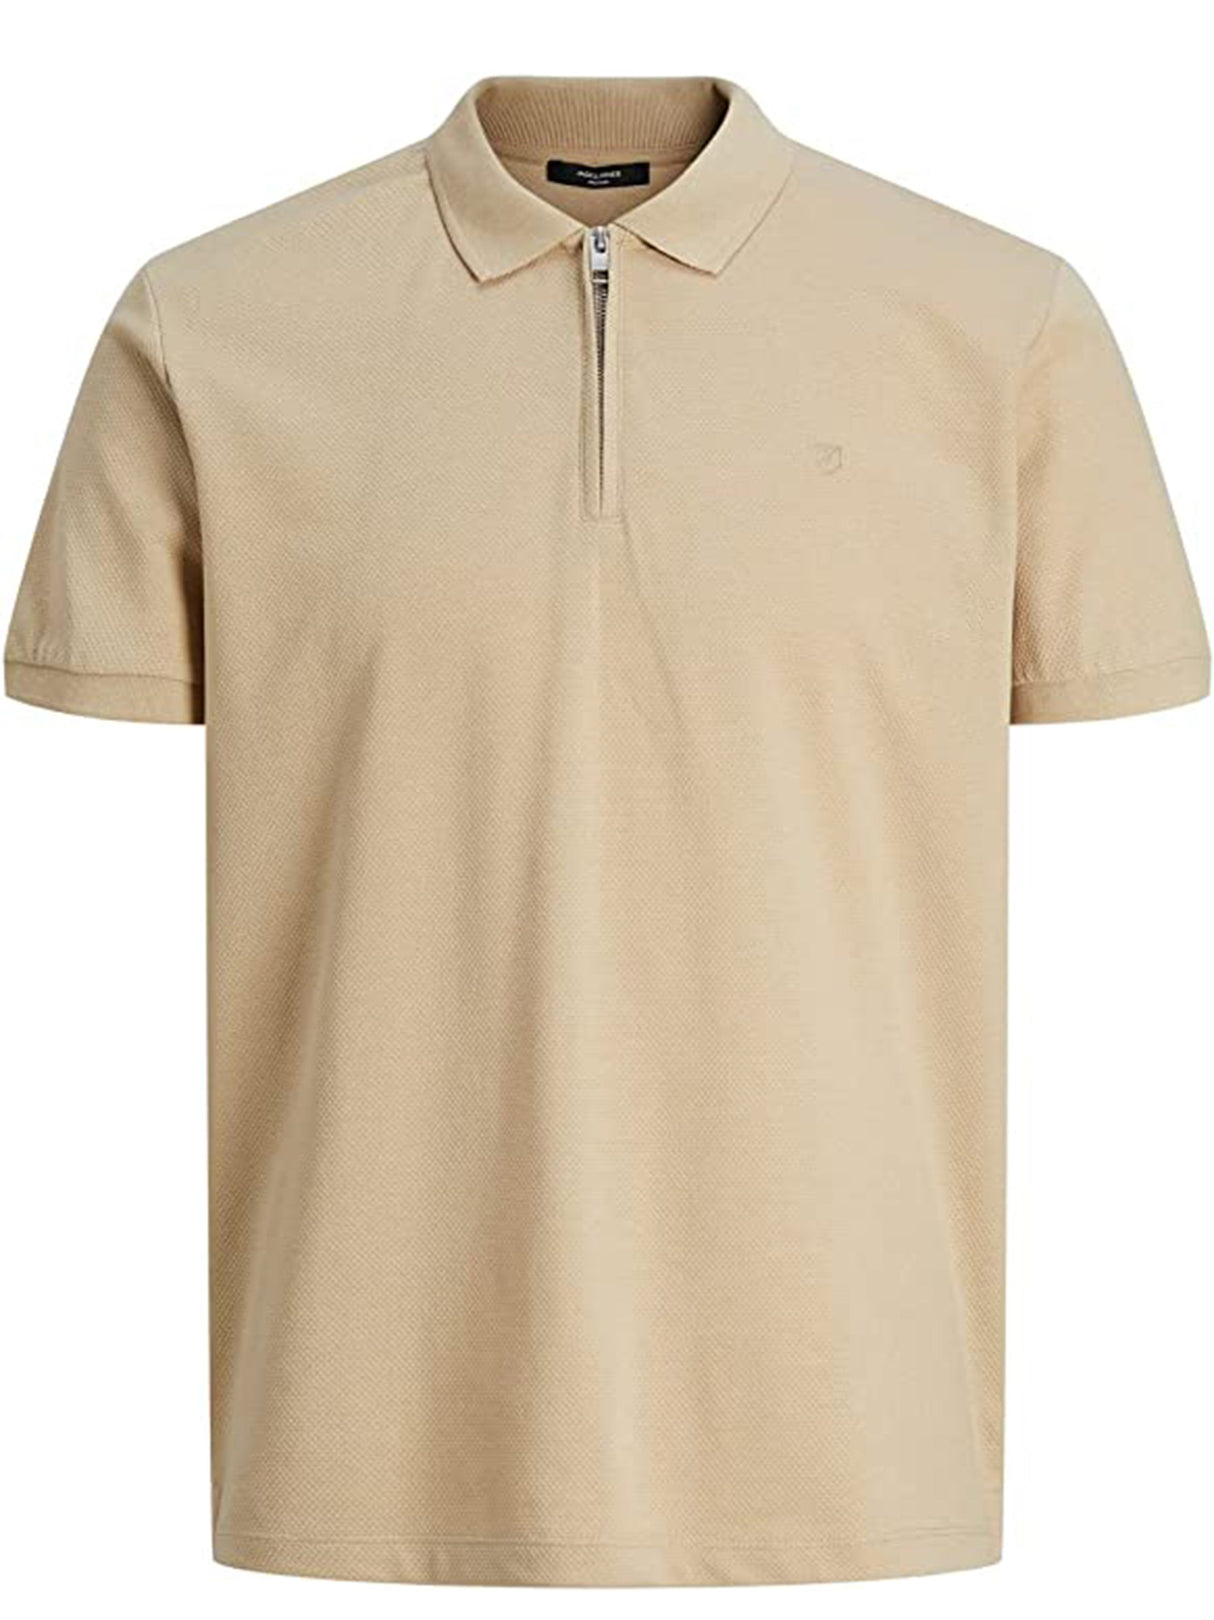 Image for Men's Textured Zip Up Polo Shirt,Beige